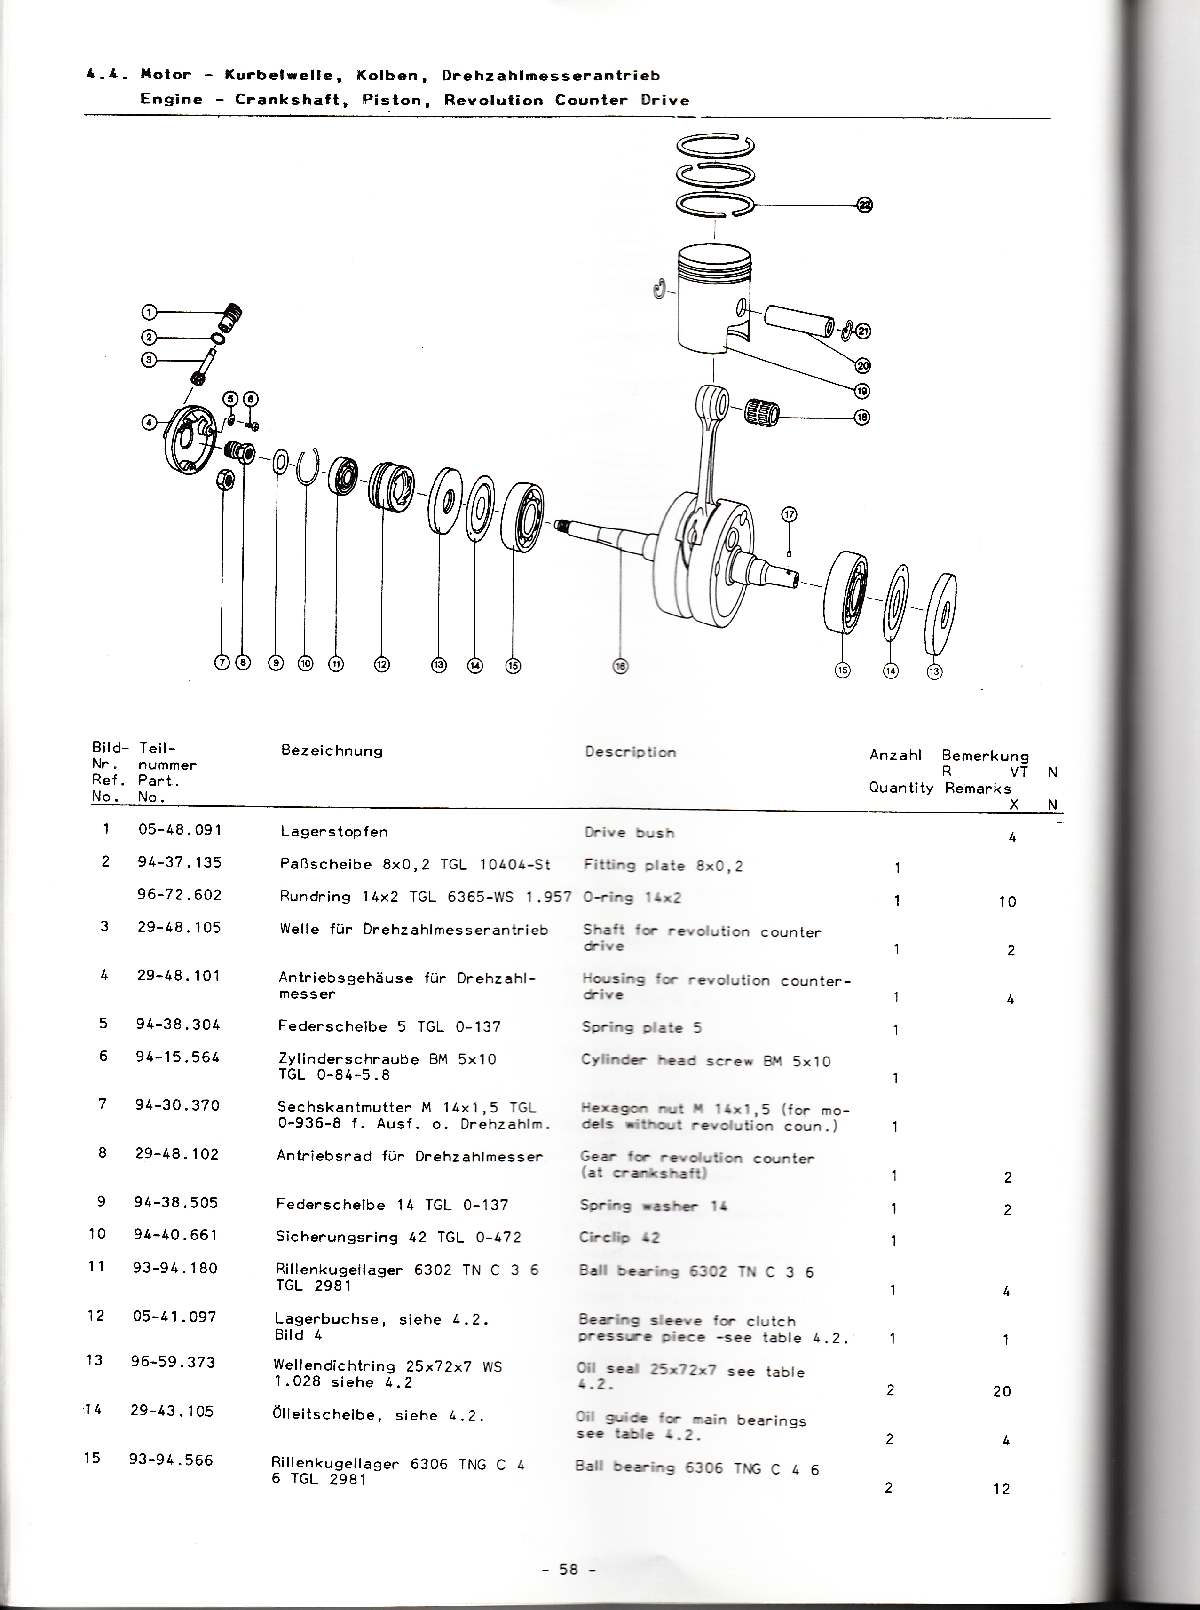 Katalog MZ 251 ETZ - 4.4. Motor - Kurbelwelle, Kolben, Drehzahlmesserantrieb Engine - Crankshaft, Piston, Revolution Counter Drive 